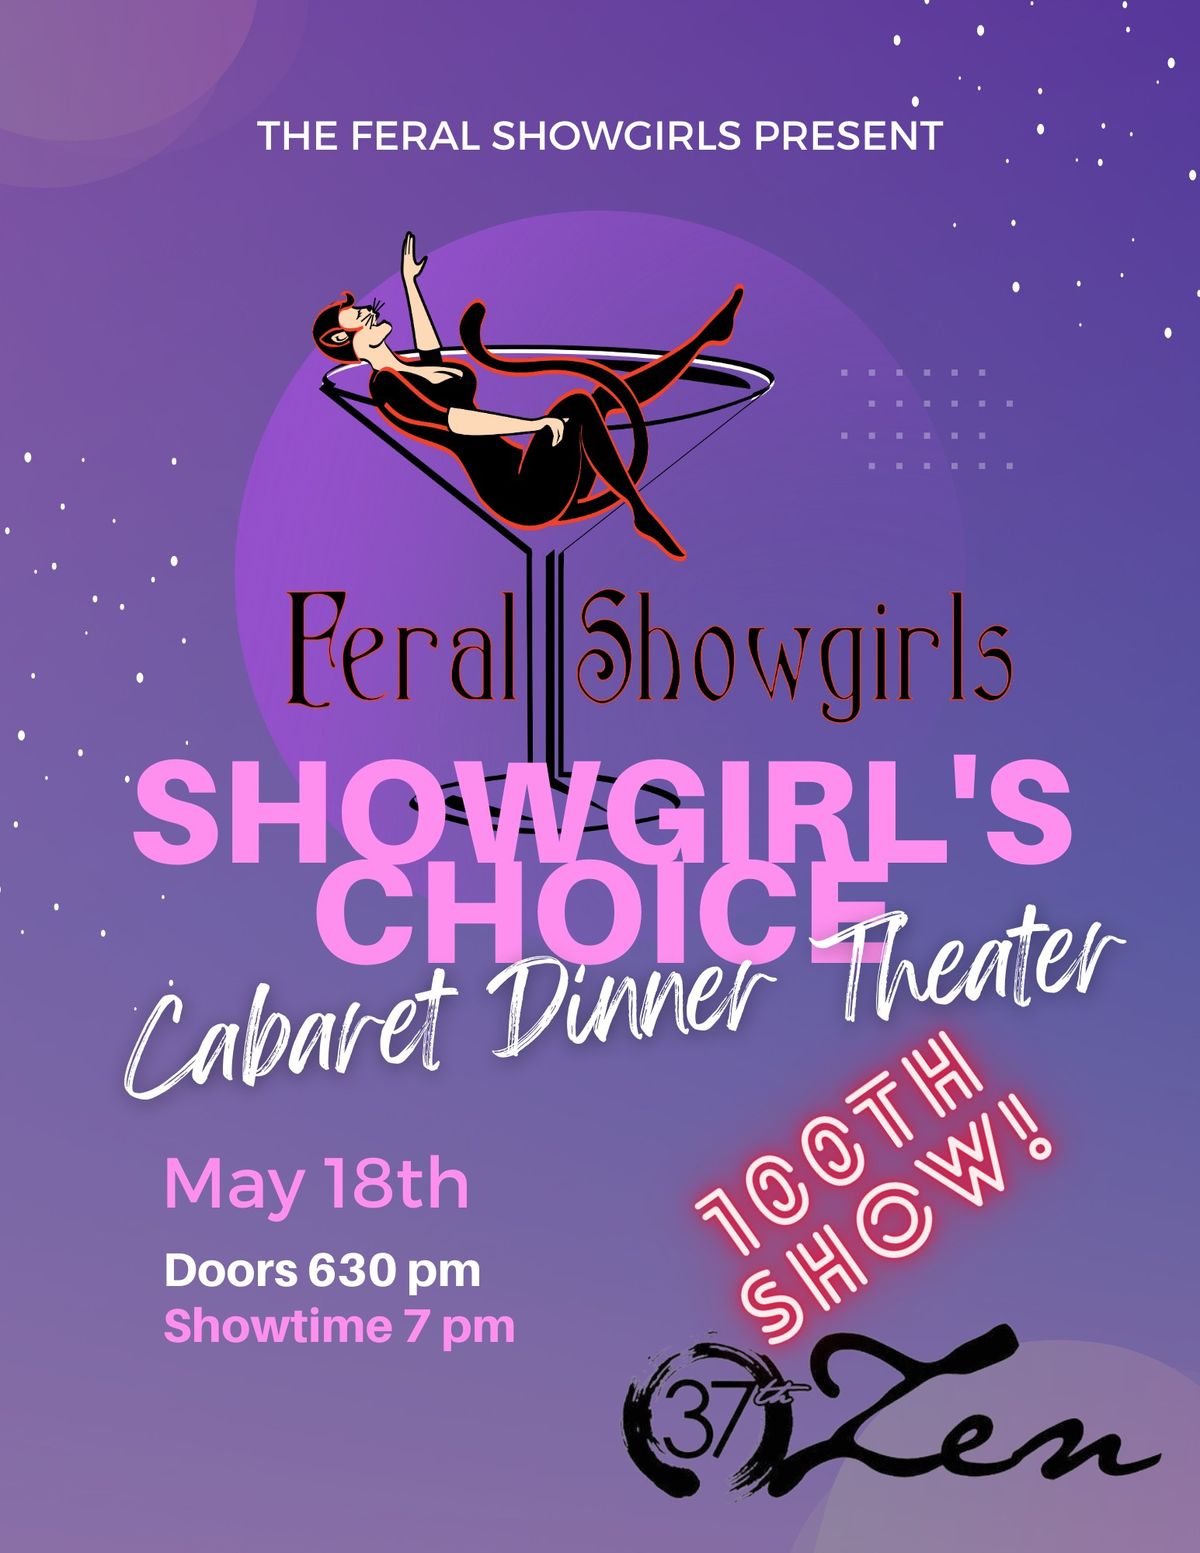 Cabaret Dinner Theater Showgirl's Choice!